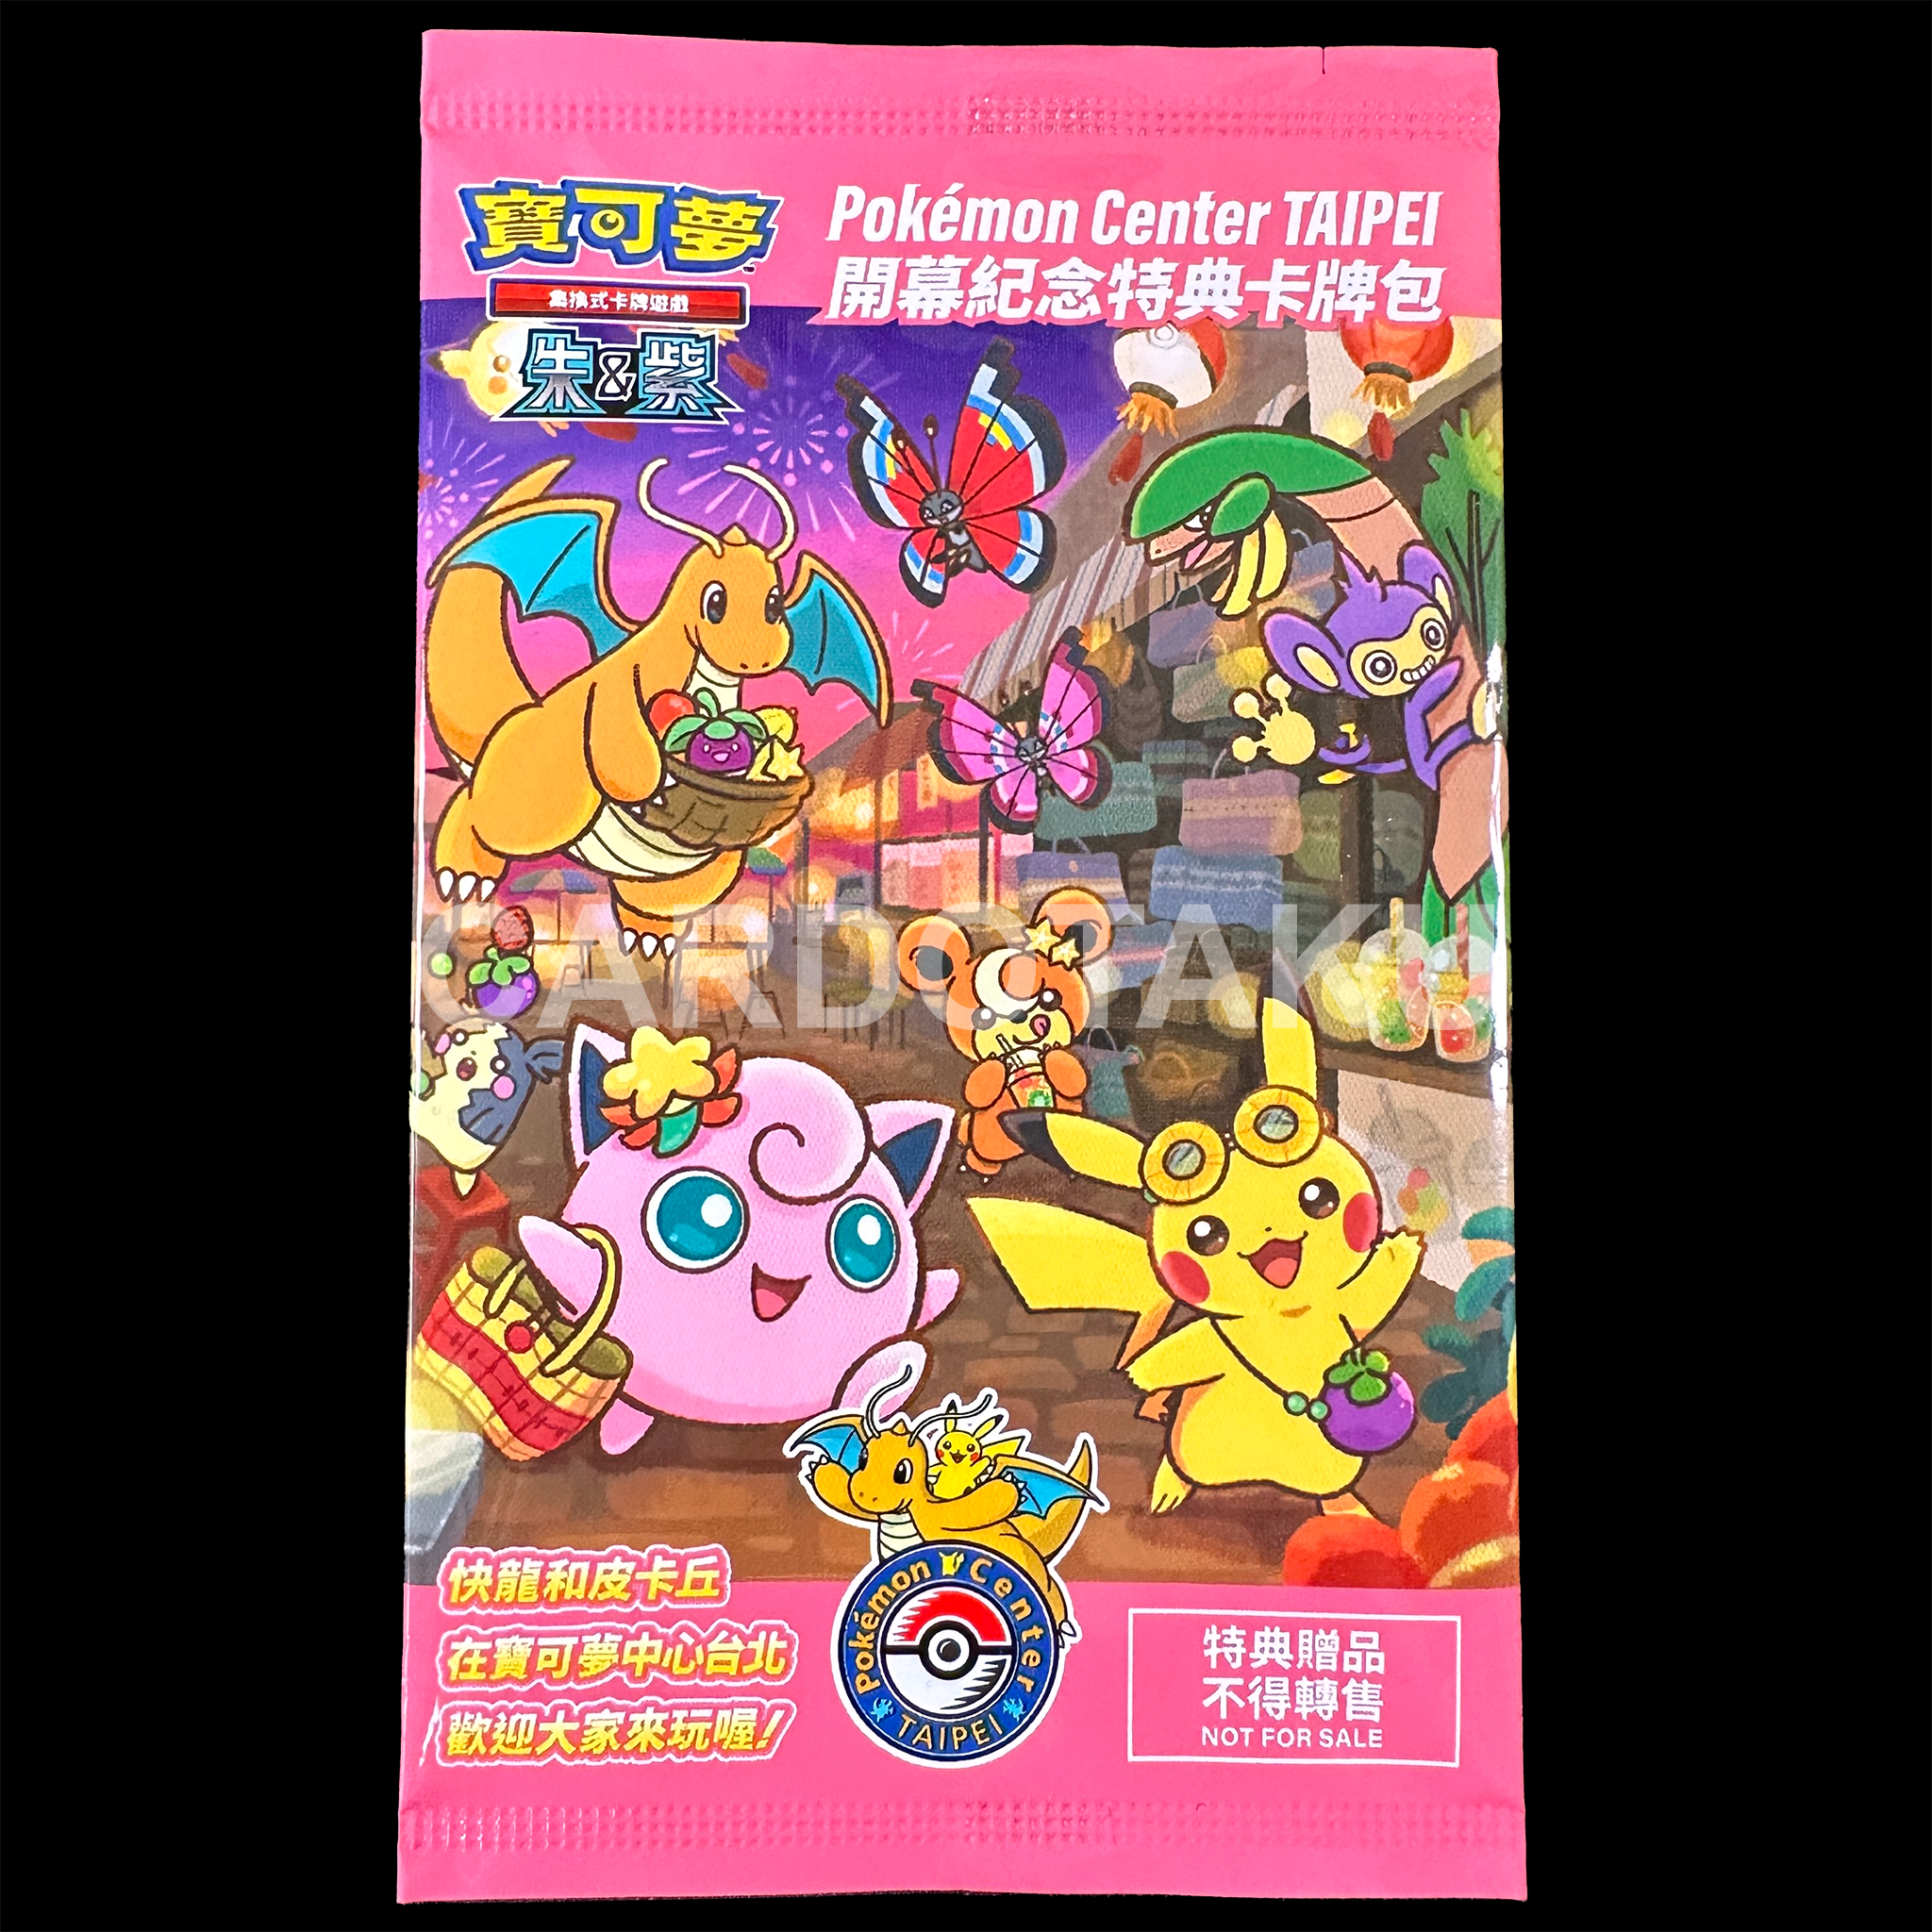 Pokémon Card Game PROMO 057/SV-P [Pokémon Center TAIPEI] in blister